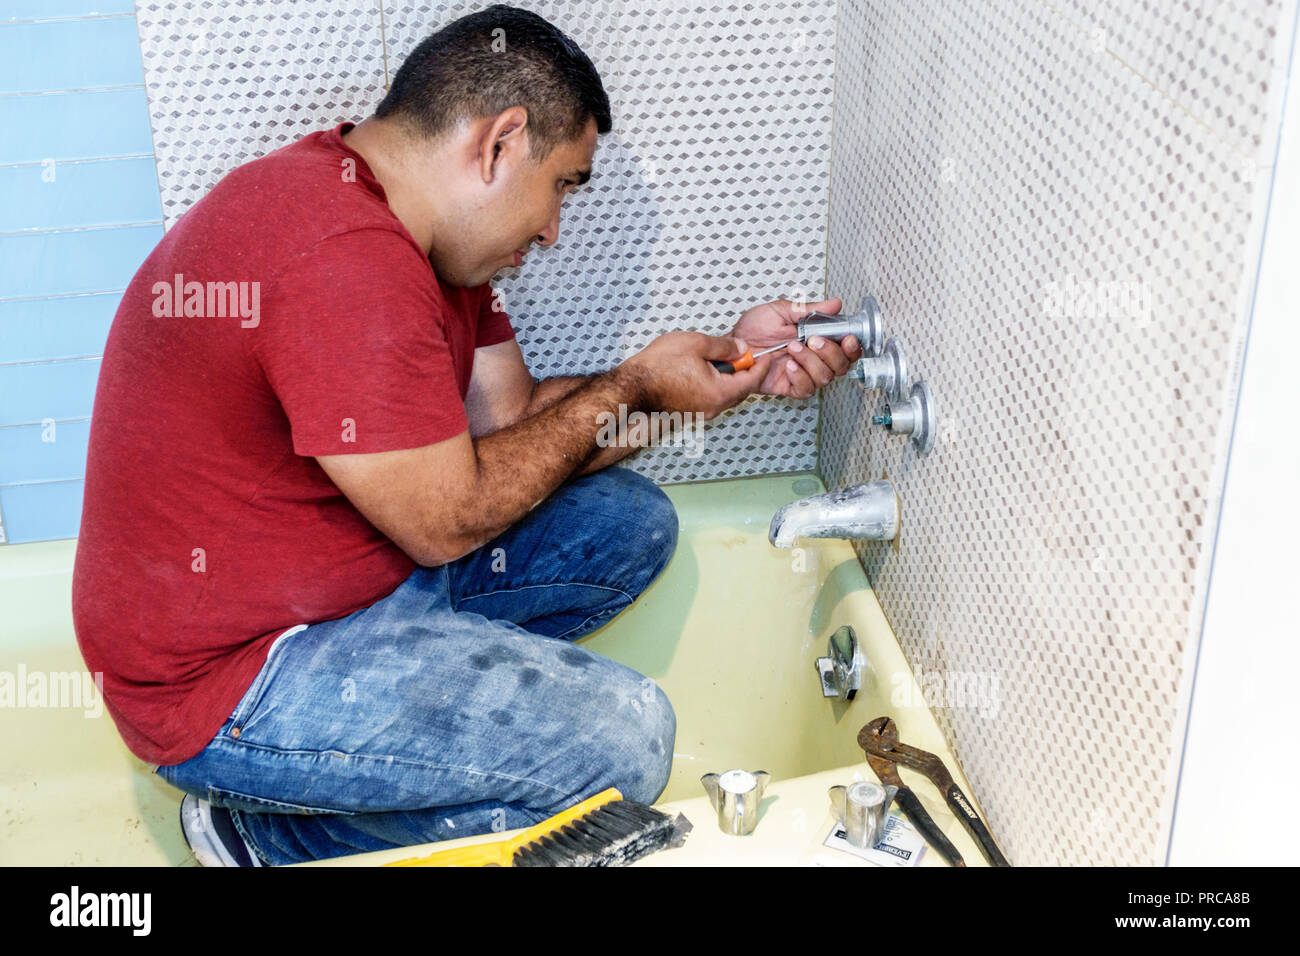 Miami Beach Florida,contractor,Hispanic man men male,bathroom plumbing shower installation installing,working,FL180630092 Stock Photo